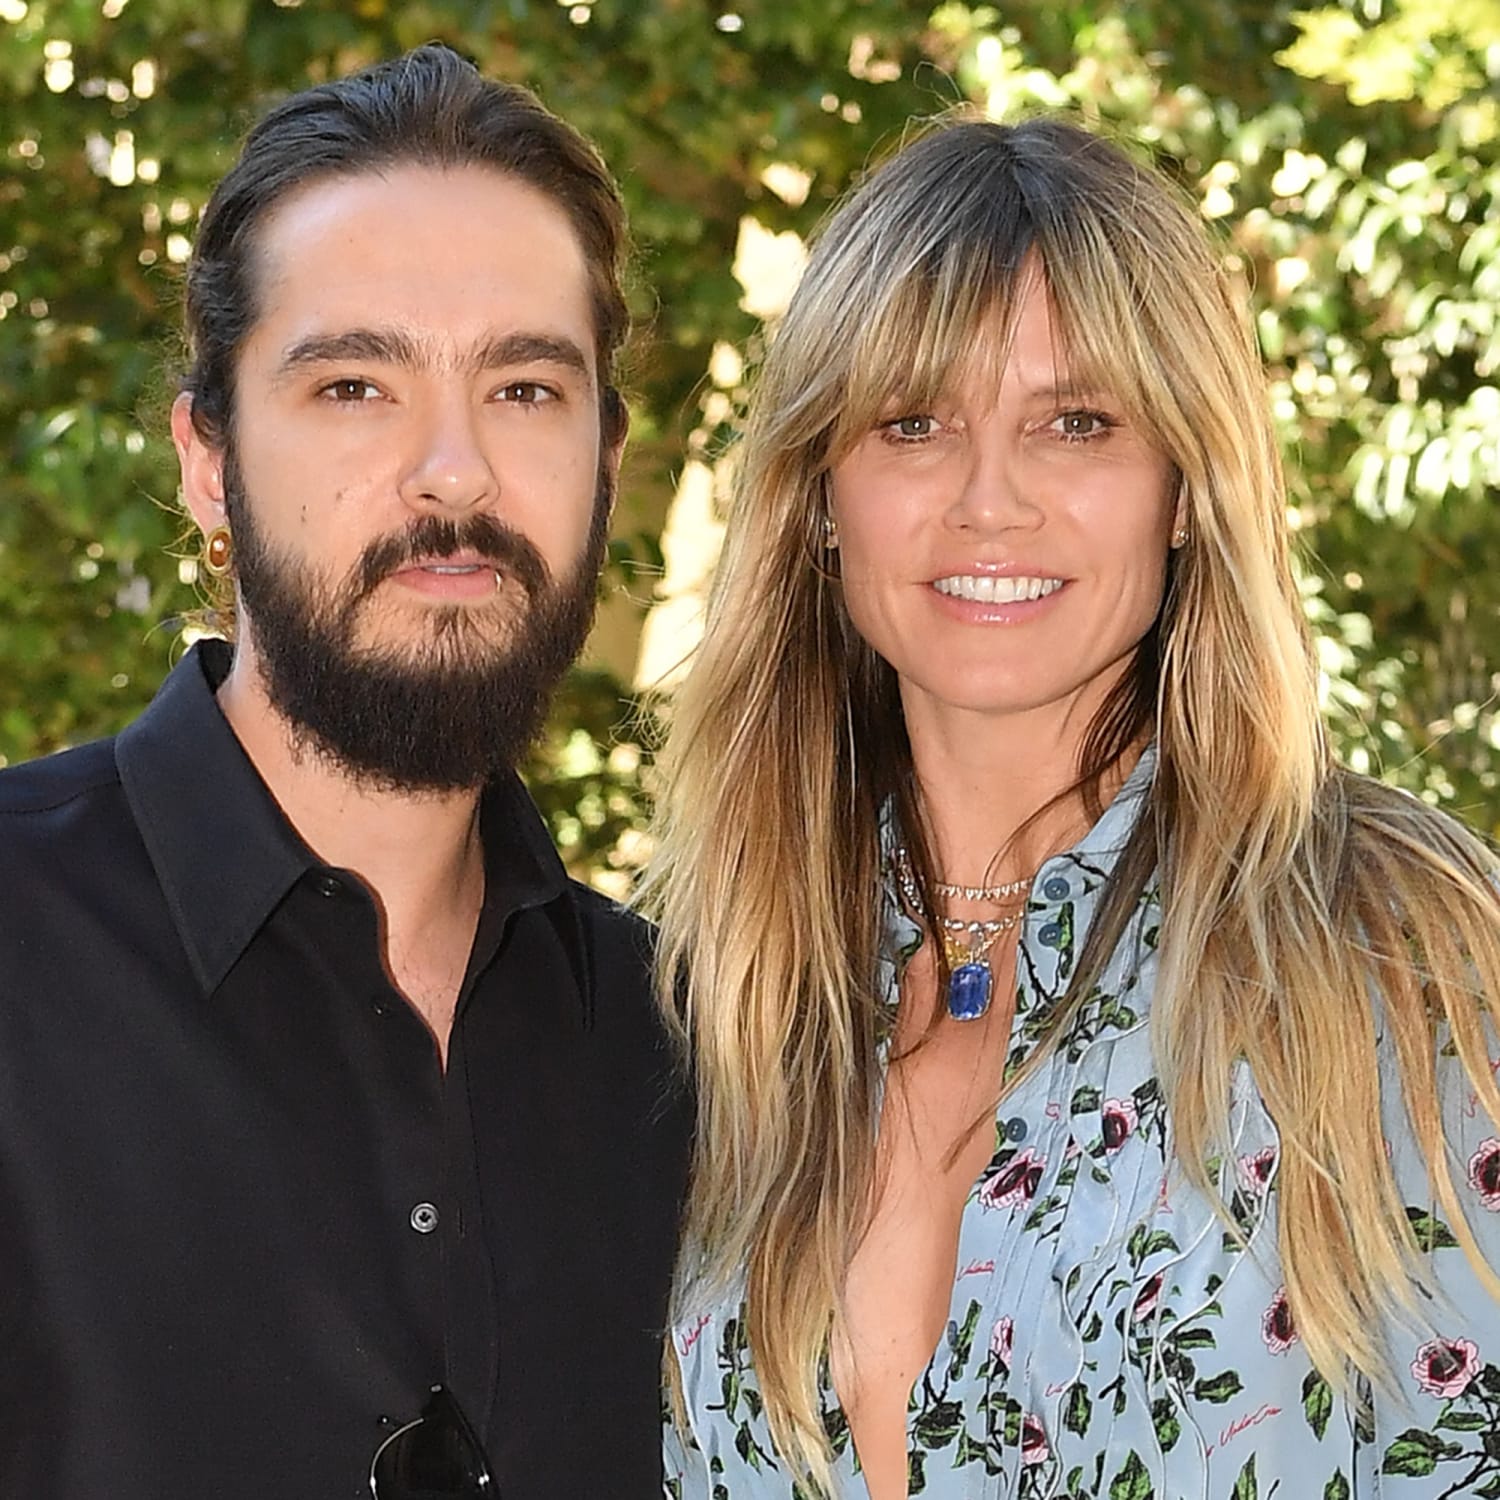 Heidi Klum and fiancé Tom Kaulitz have